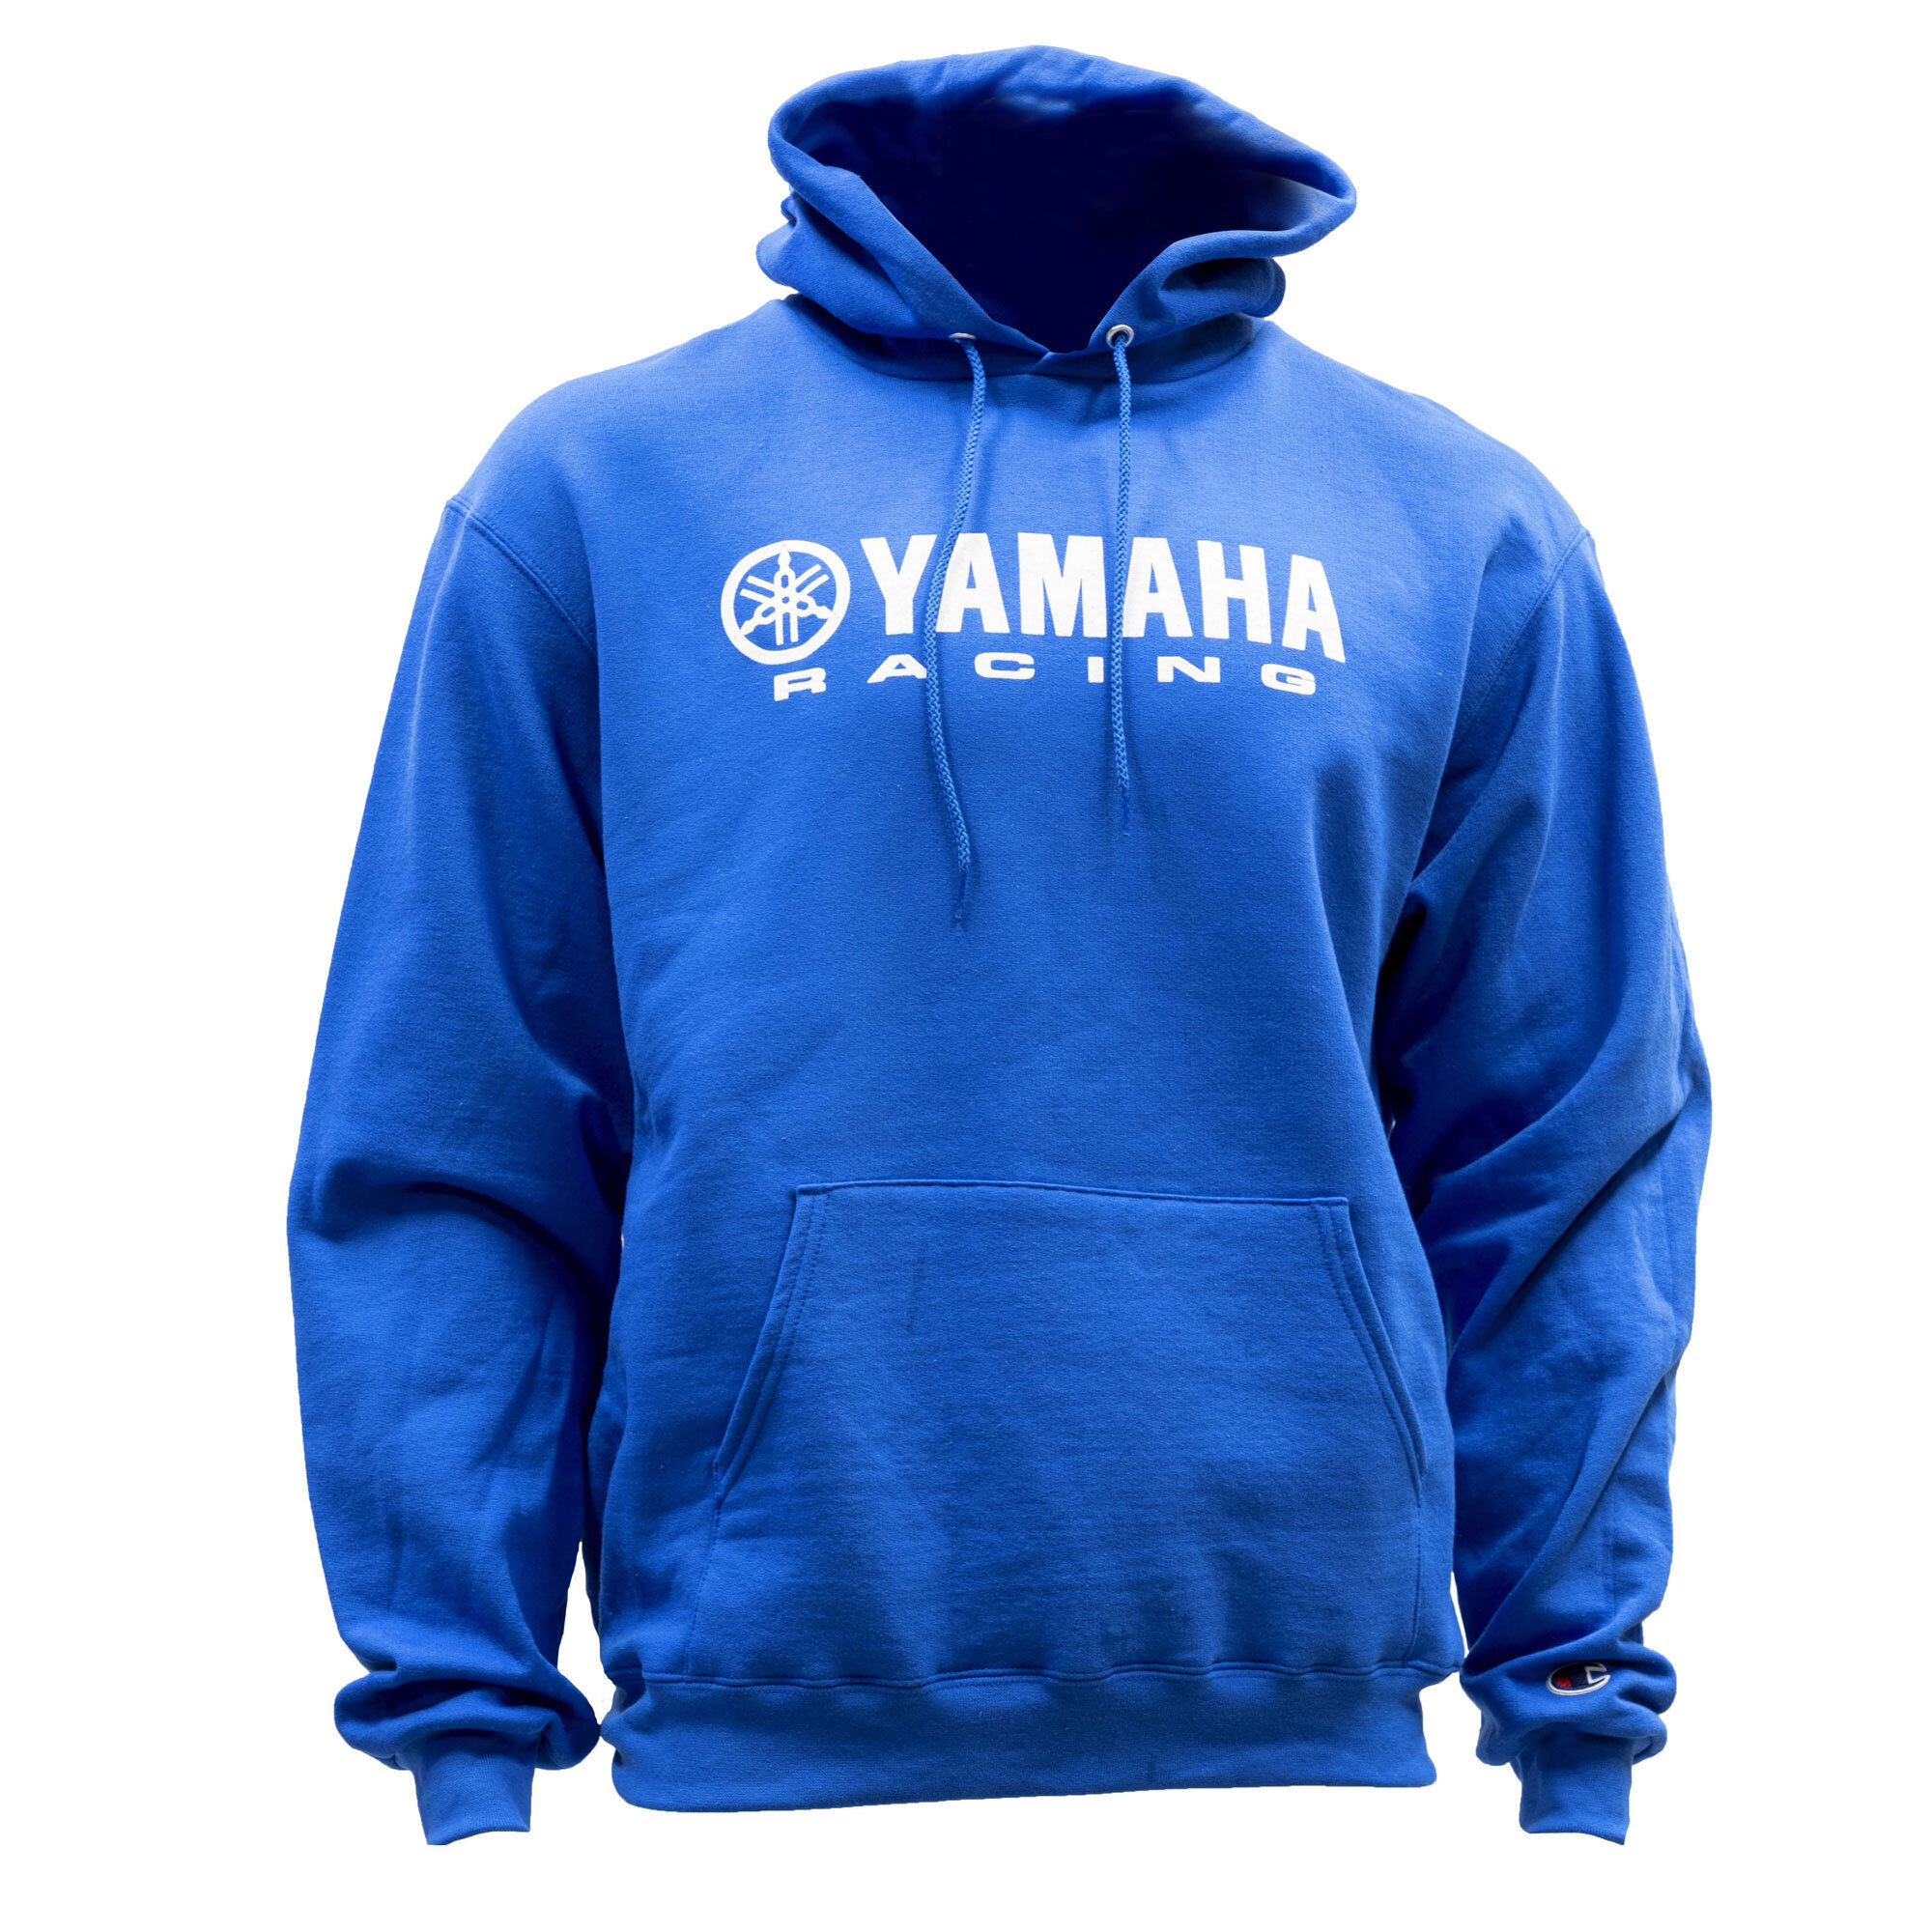 Yamaha Racing Pullover Hoodie by Champion®